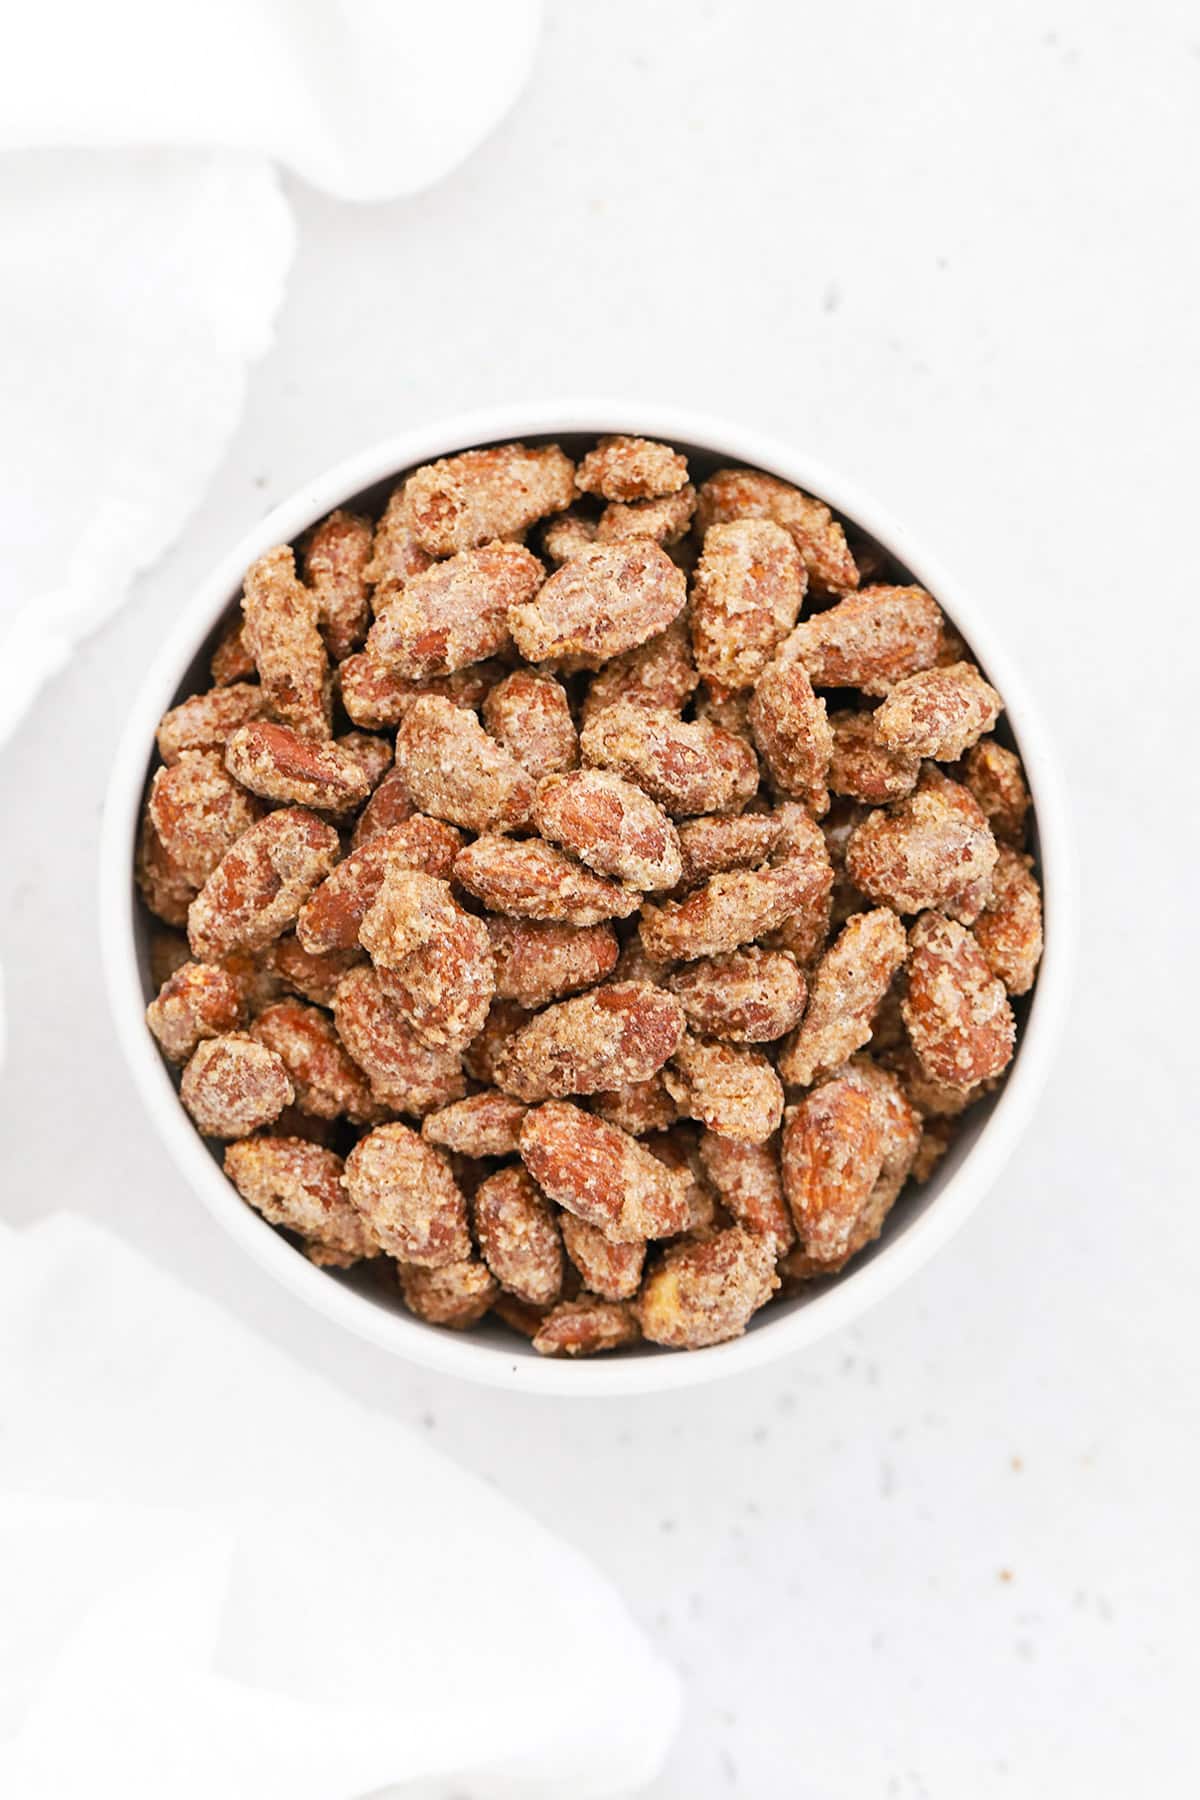 Overhead view of cinnamon almonds in a white bowl